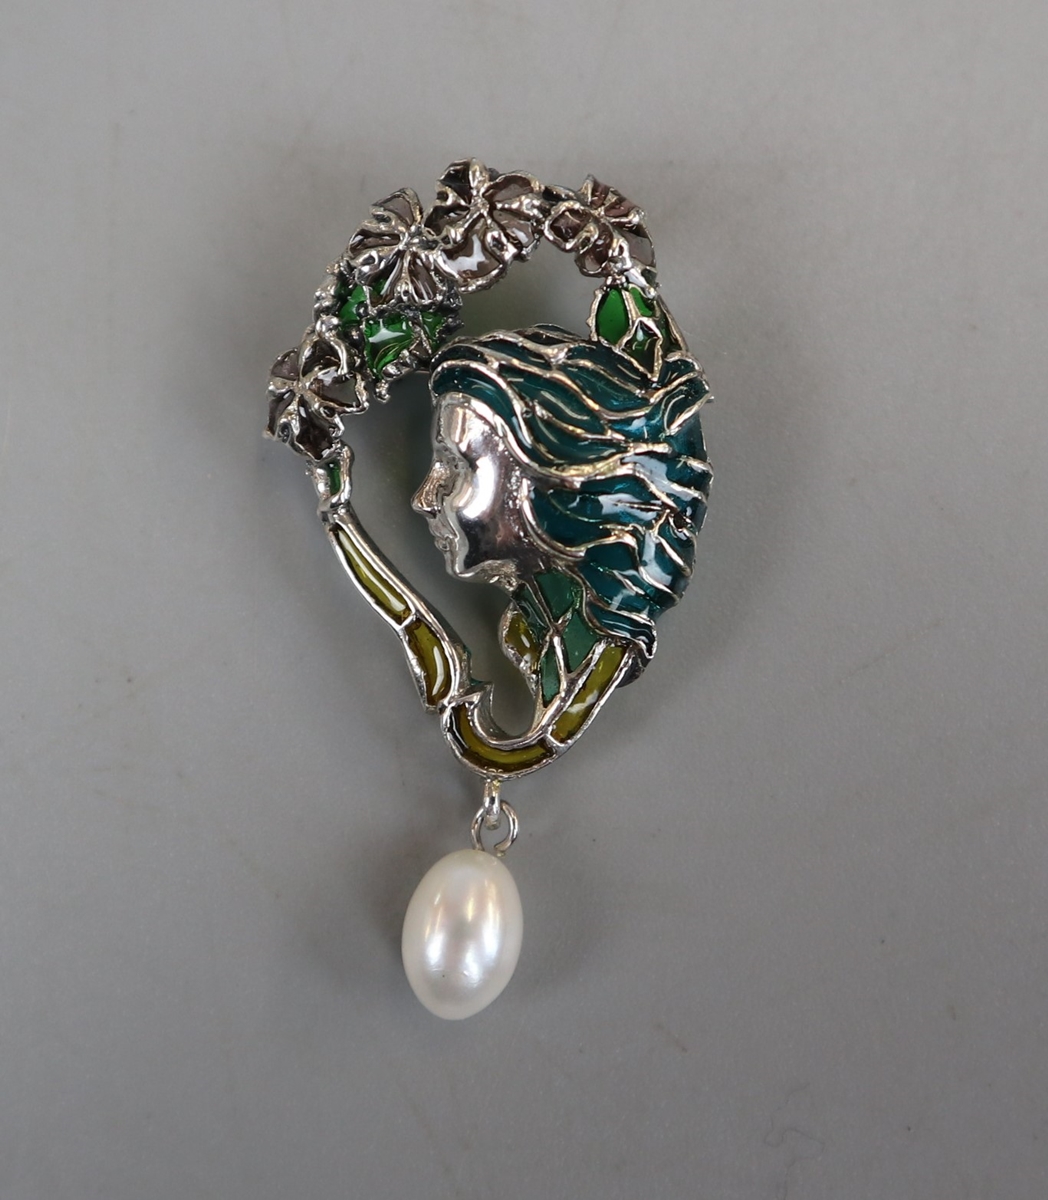 Silver and enamel Art Nouveau style brooch